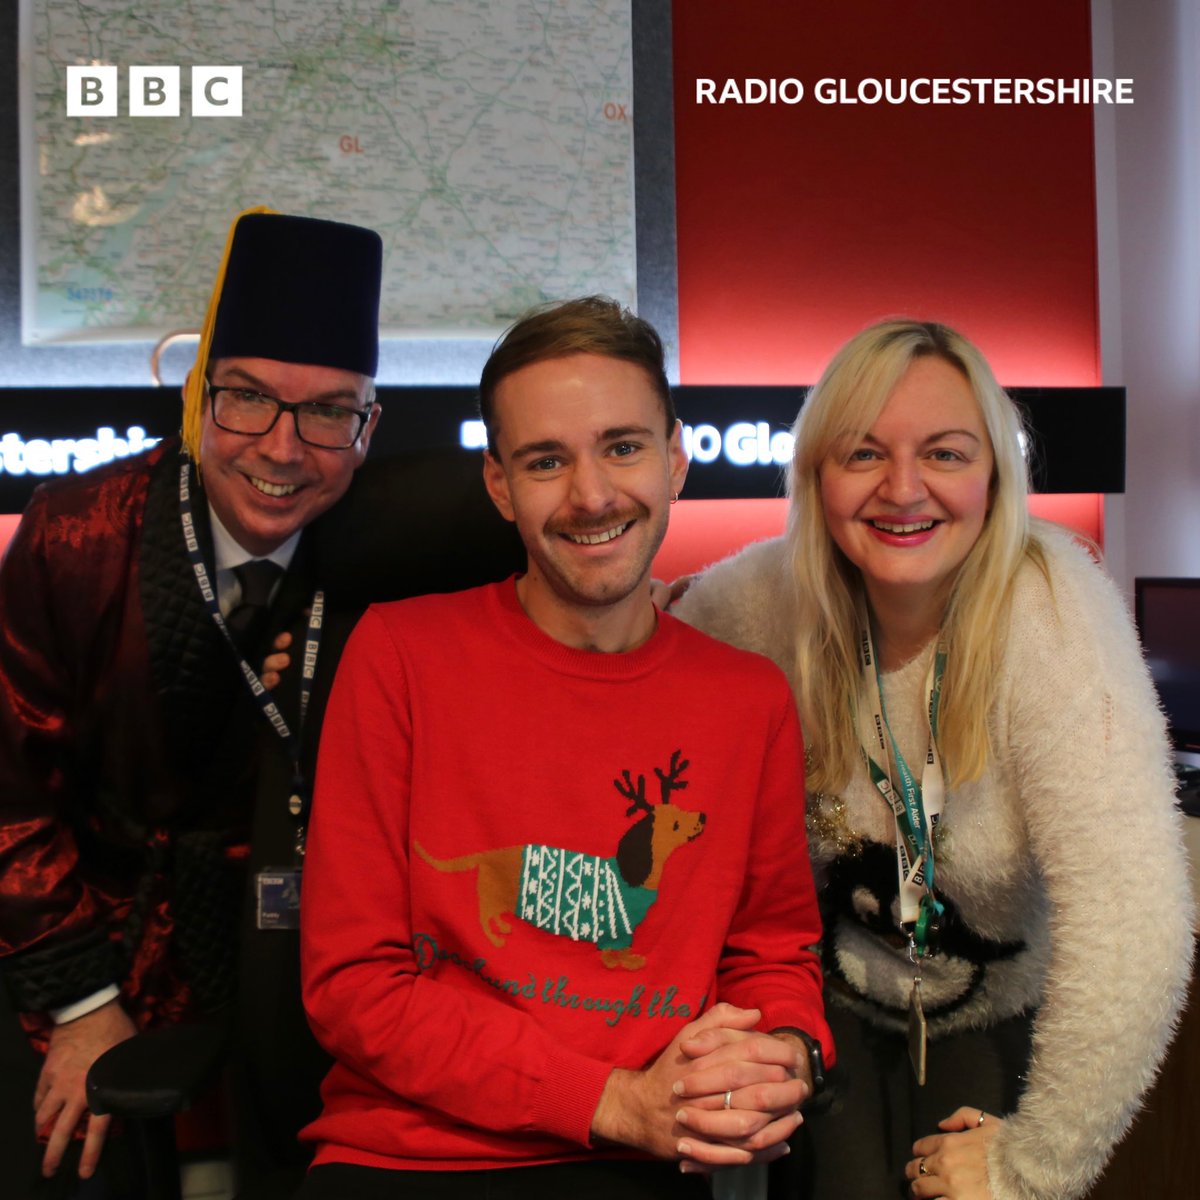 🎄Merry Christmas from BBC Radio Gloucestershire - Paddy on News, @_jonnysmith and @jojo_durrant